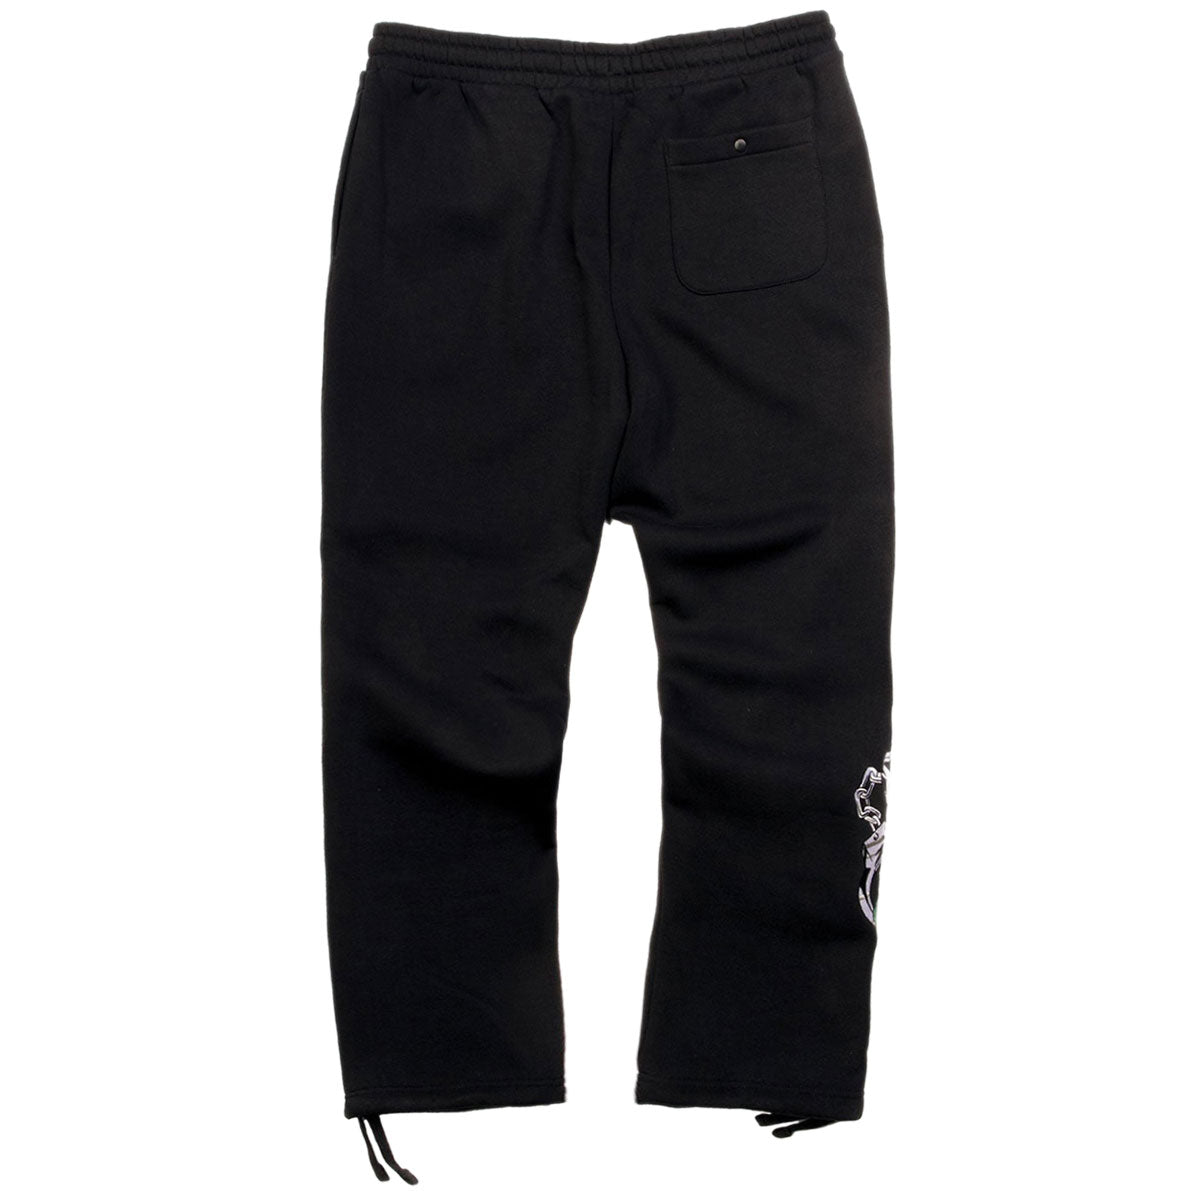 DGK Freedom Fleece Pants - Black image 5